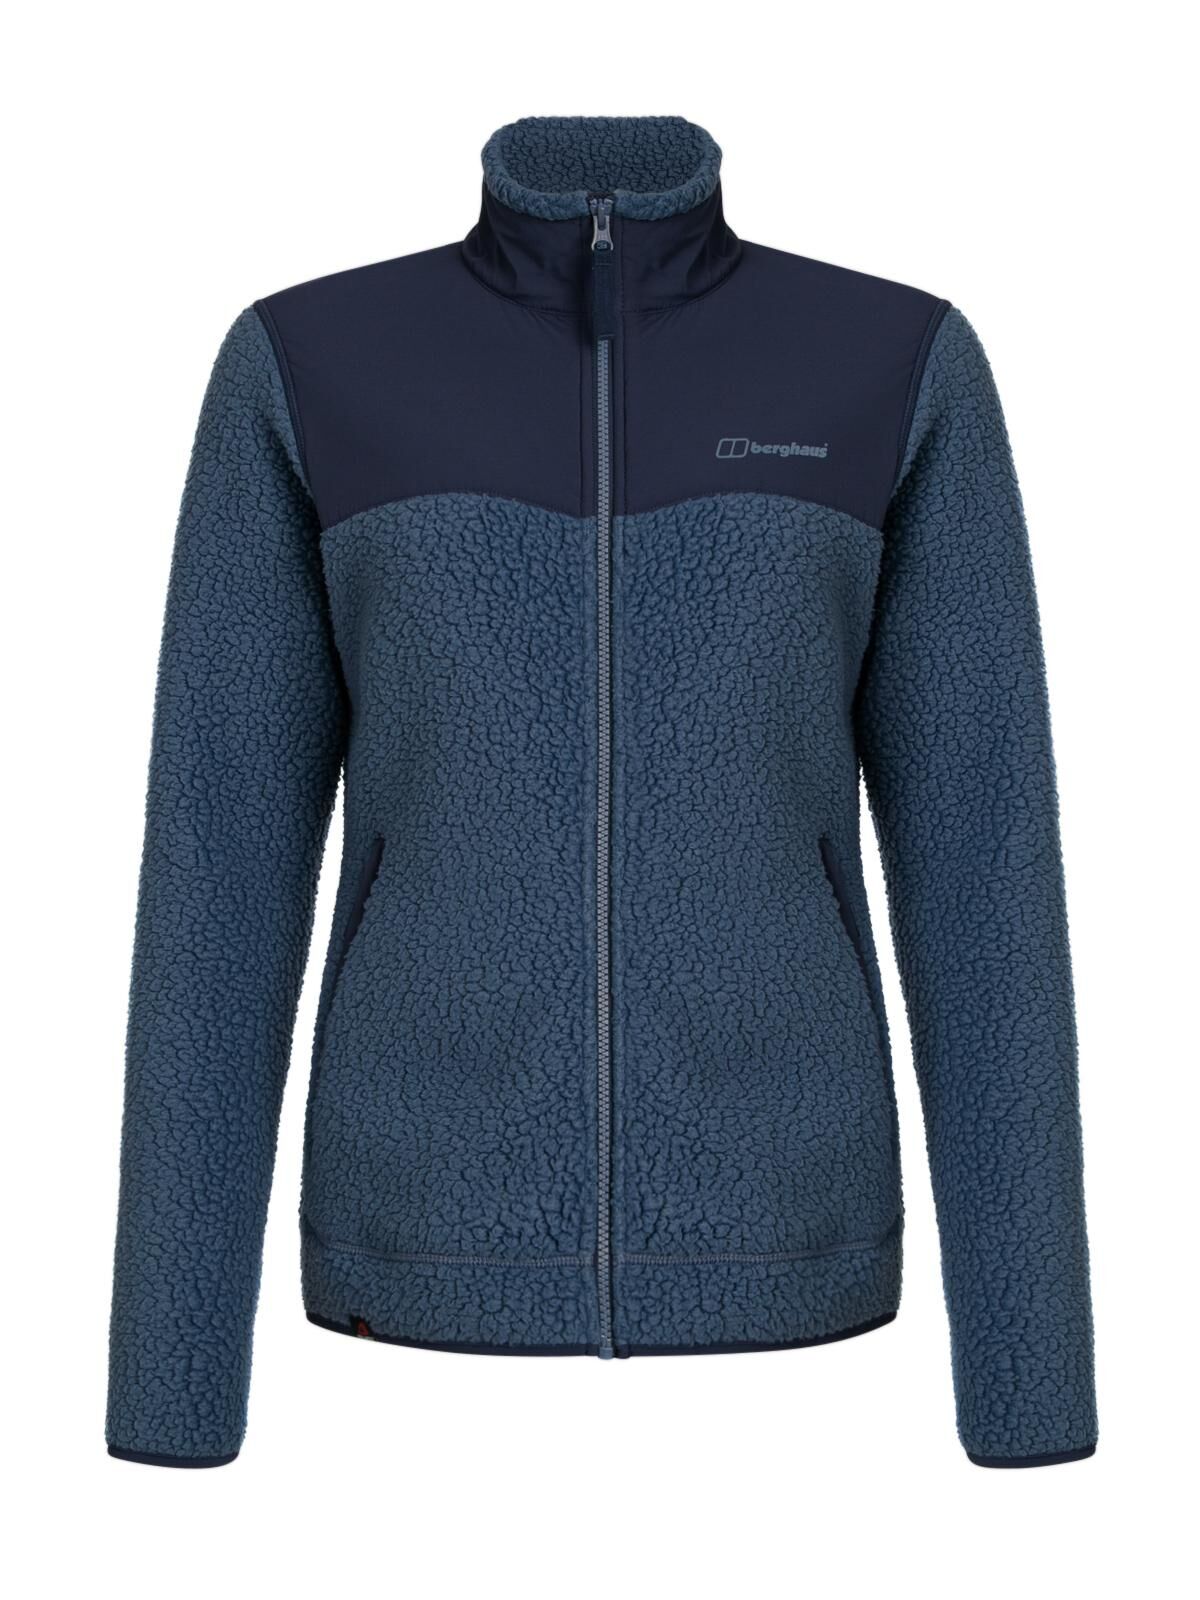 Berghaus Tahu Polartec Fleece Jacket - Fleece jacket - Women's